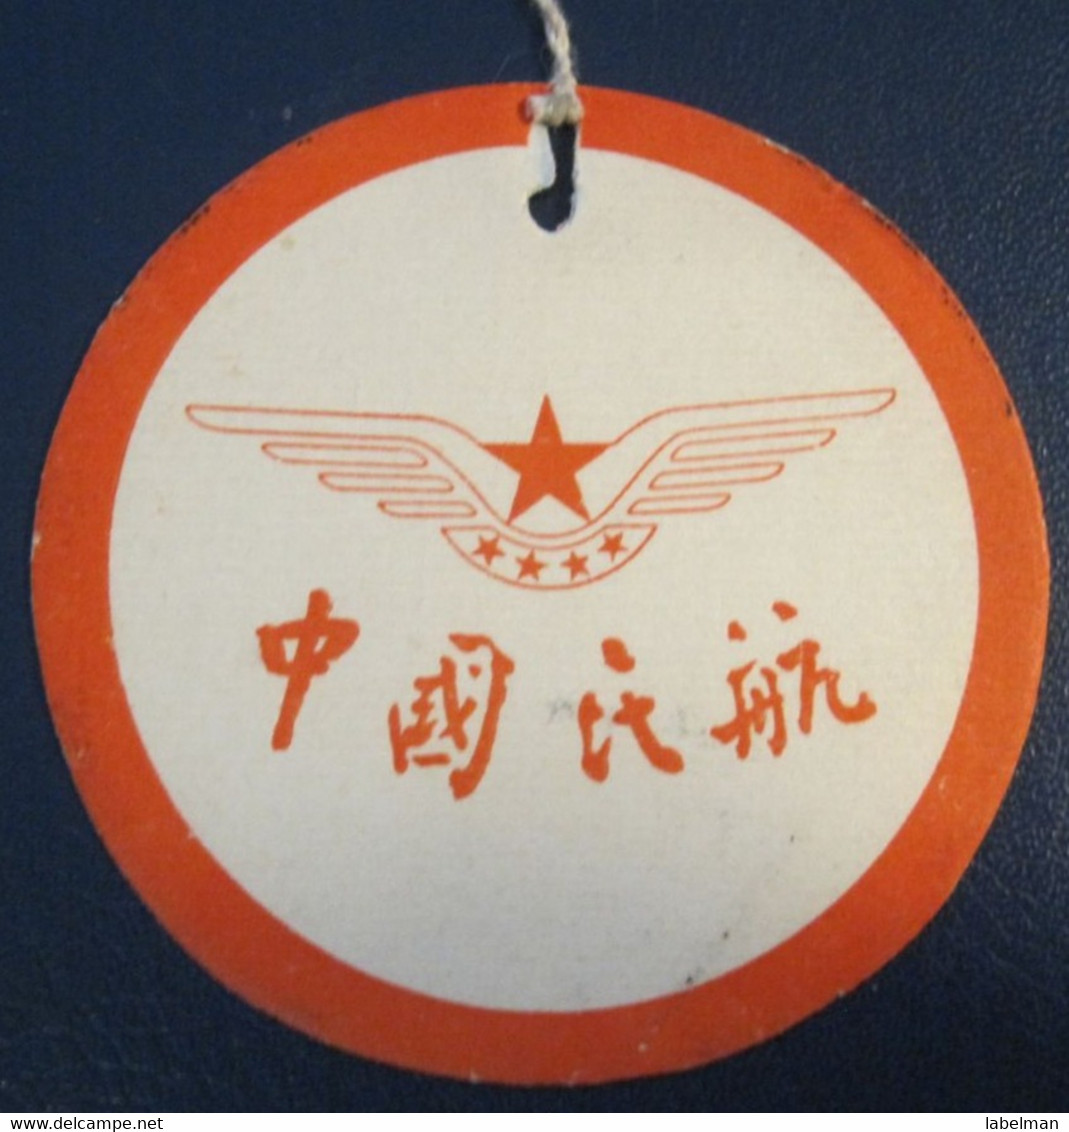 CAAC CHINA REPUBLIC AIRLINE TAG STICKER LABEL TICKET LUGGAGE BUGGAGE PLANE AIRCRAFT AIRPORT - Etiquetas De Equipaje